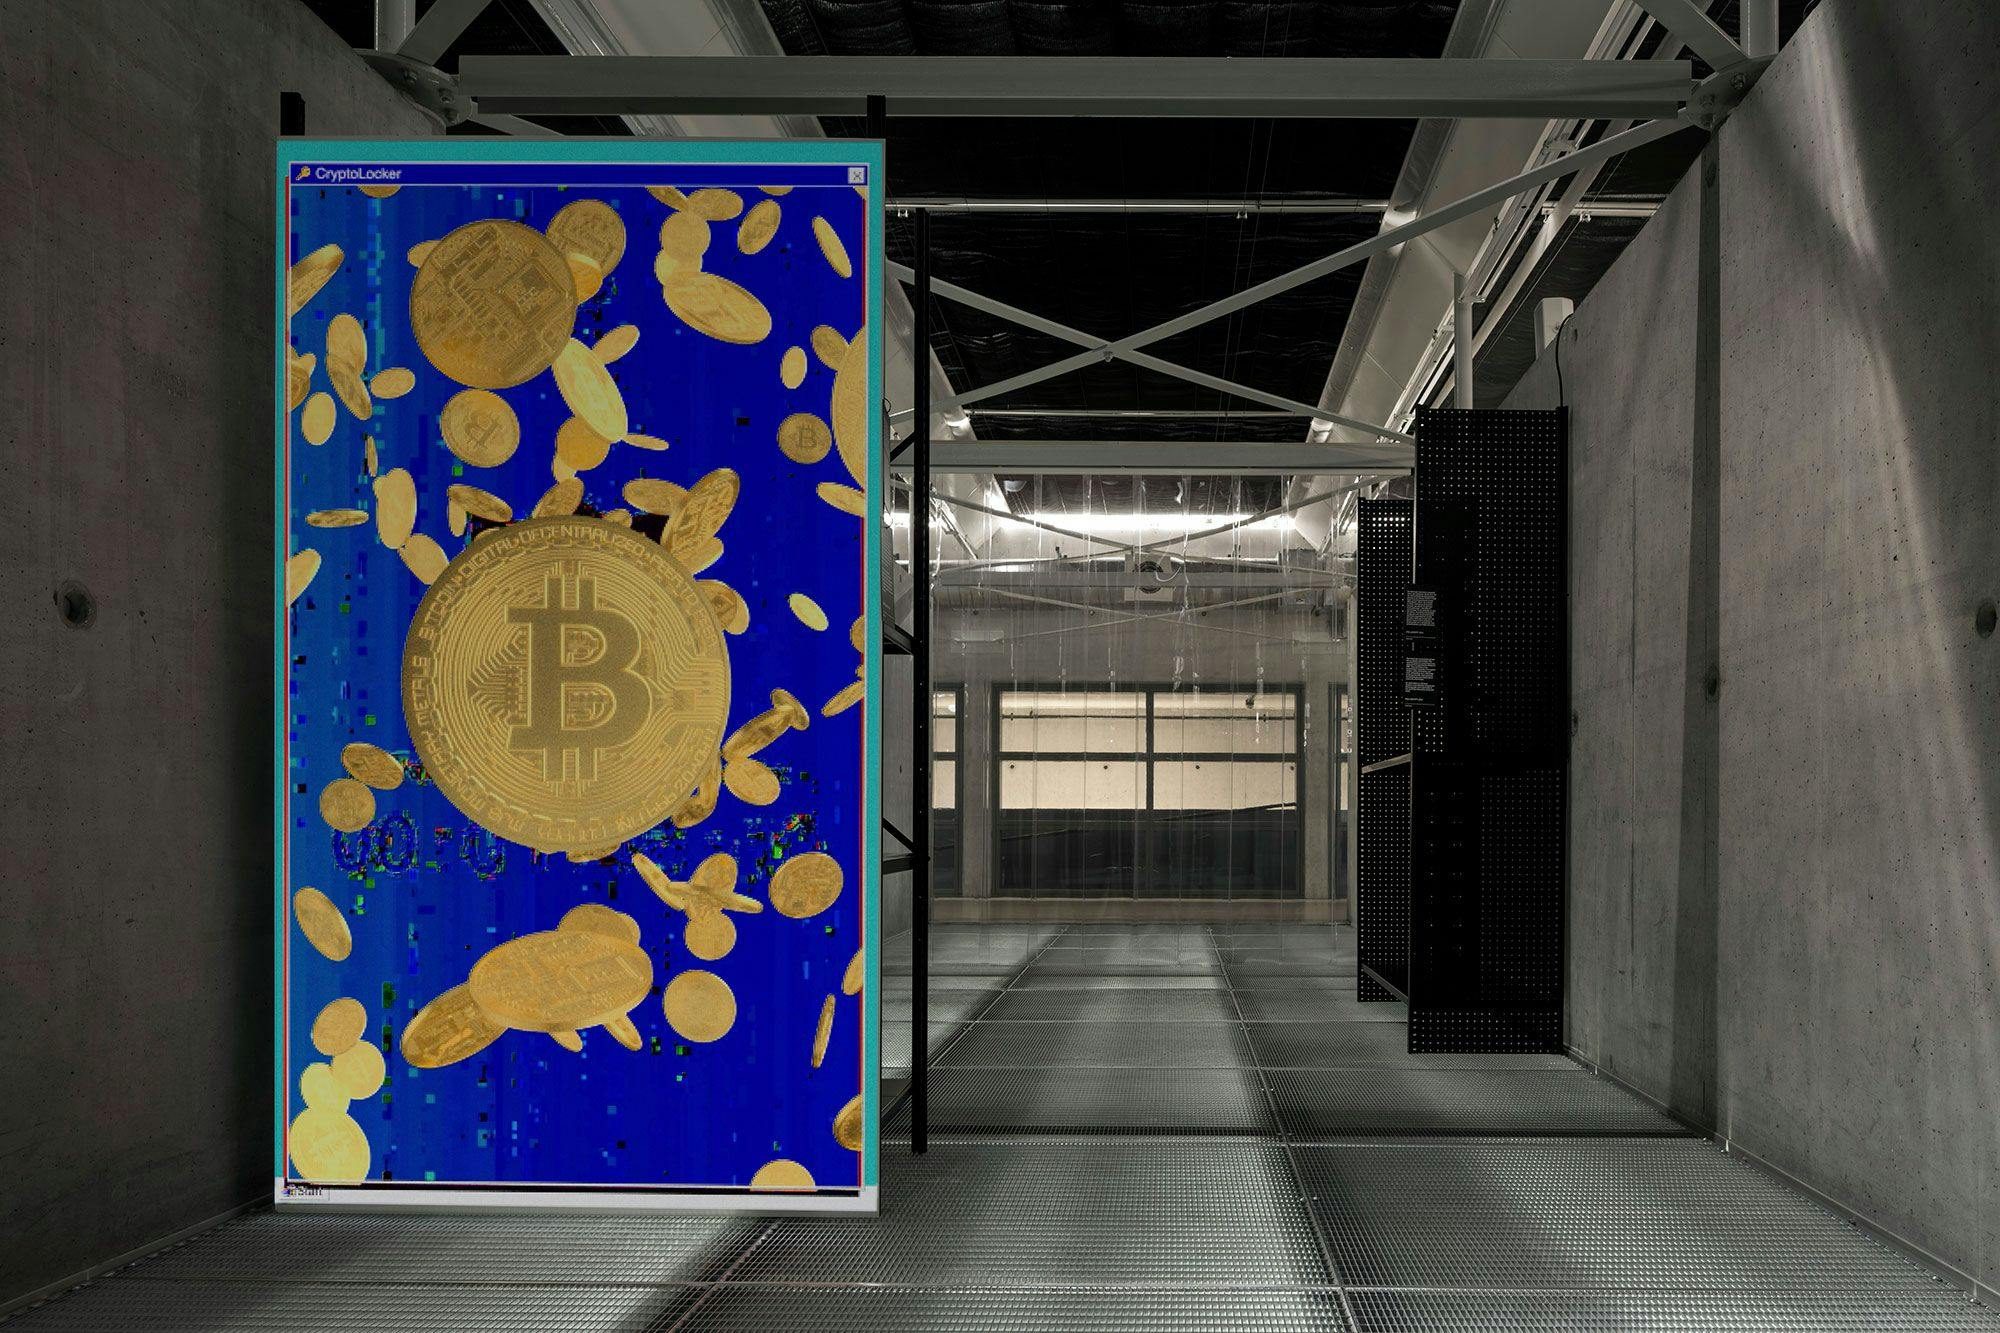 CryptoLocker ransomware (2013), part of the Malware exhibition at Het Nieuwe Instituut. Artistic interpretation by Bas van de Poel and Tomorrow Bureau. Image: Ewout Huibers 